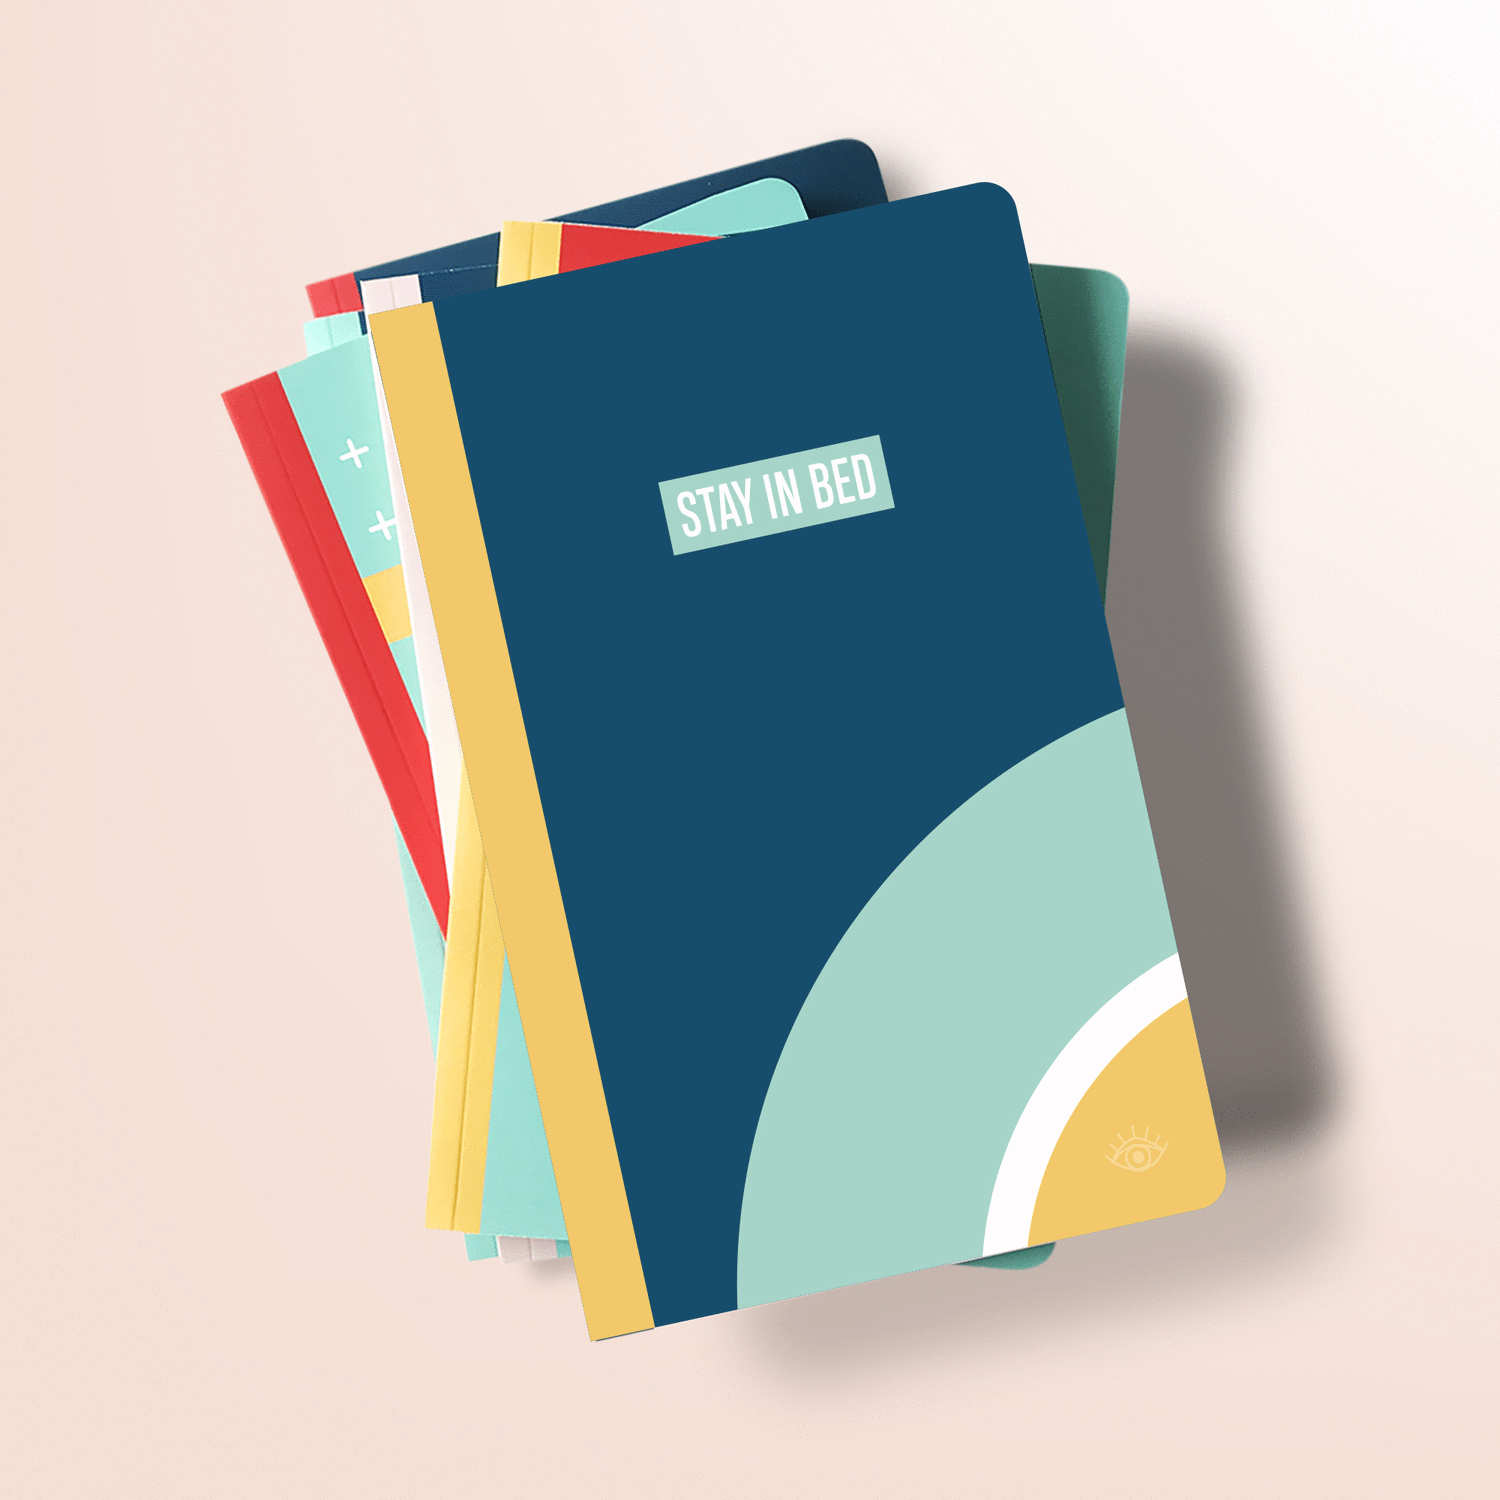 Sweet + slightly snarky double-sided notebooks by I&